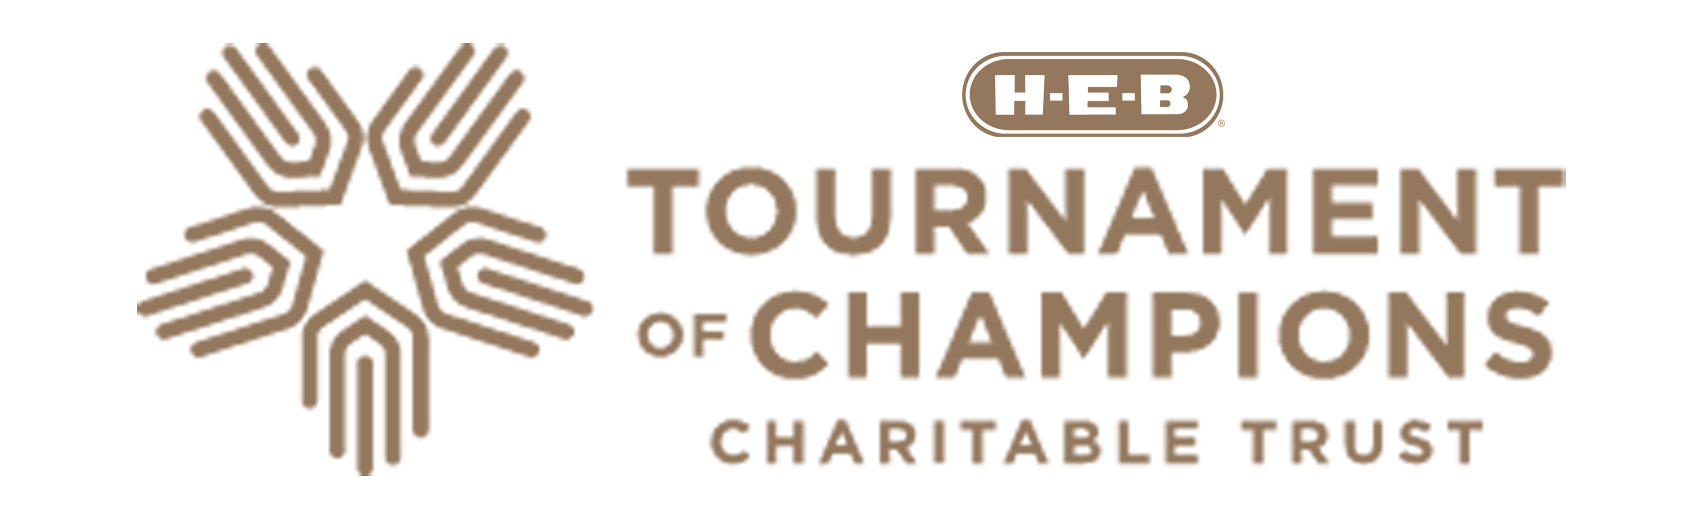 HEB Tournament of Champions logo